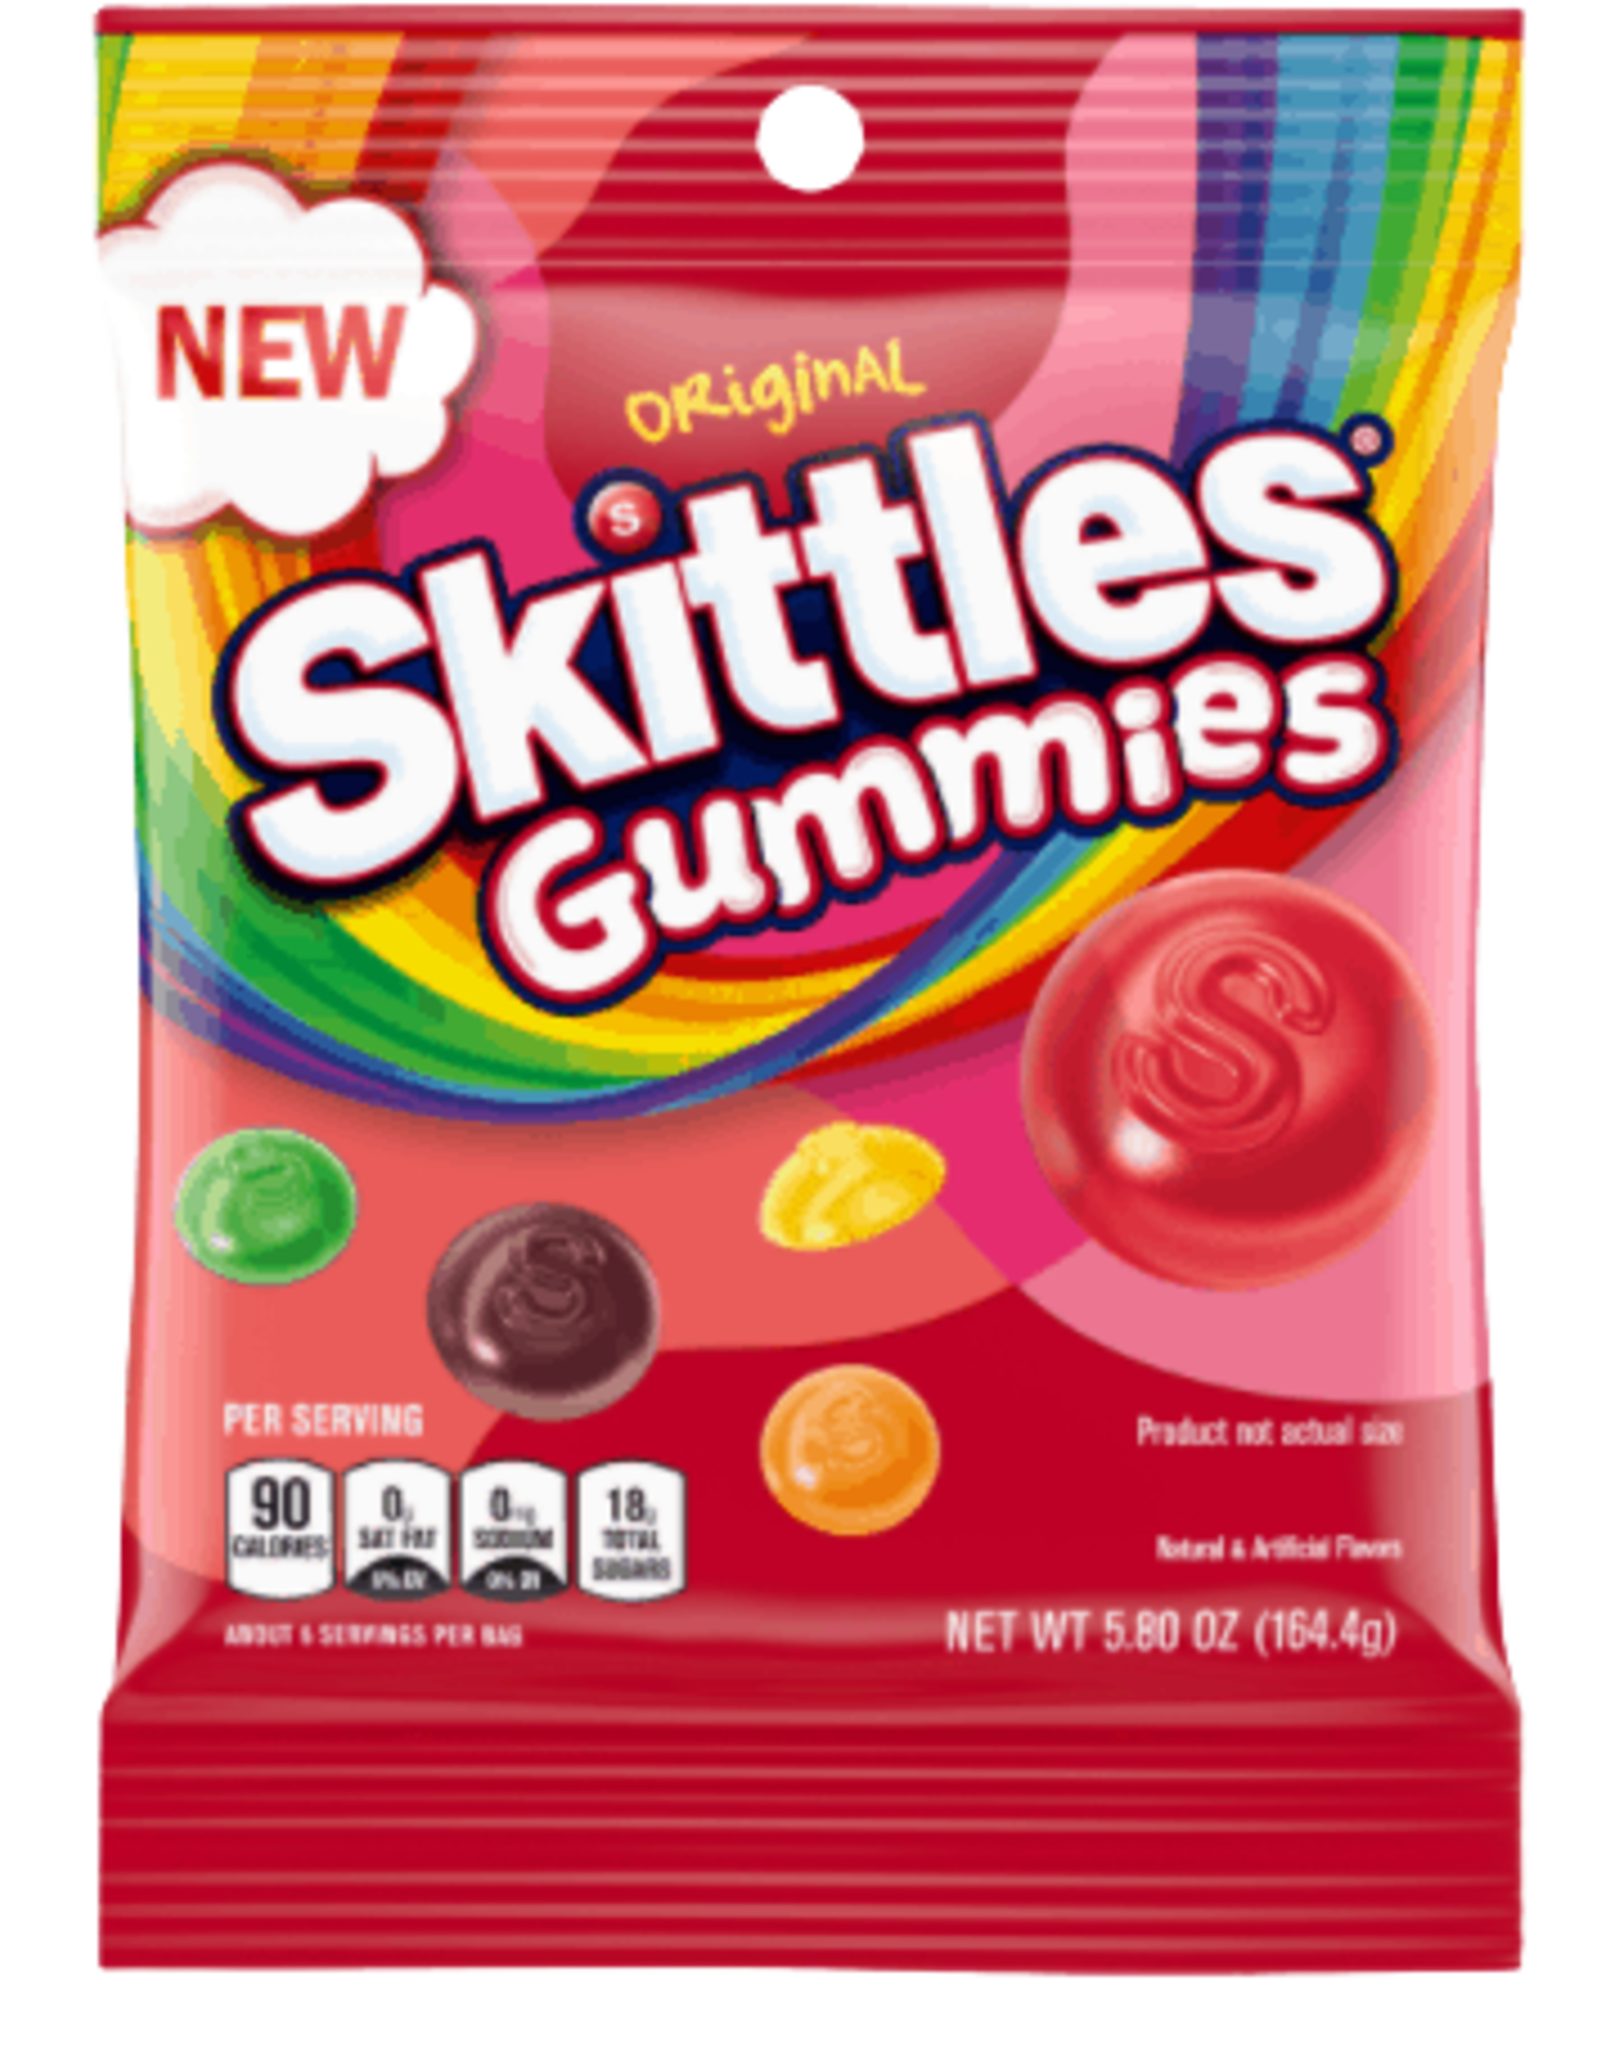 Skittles Gummies Original